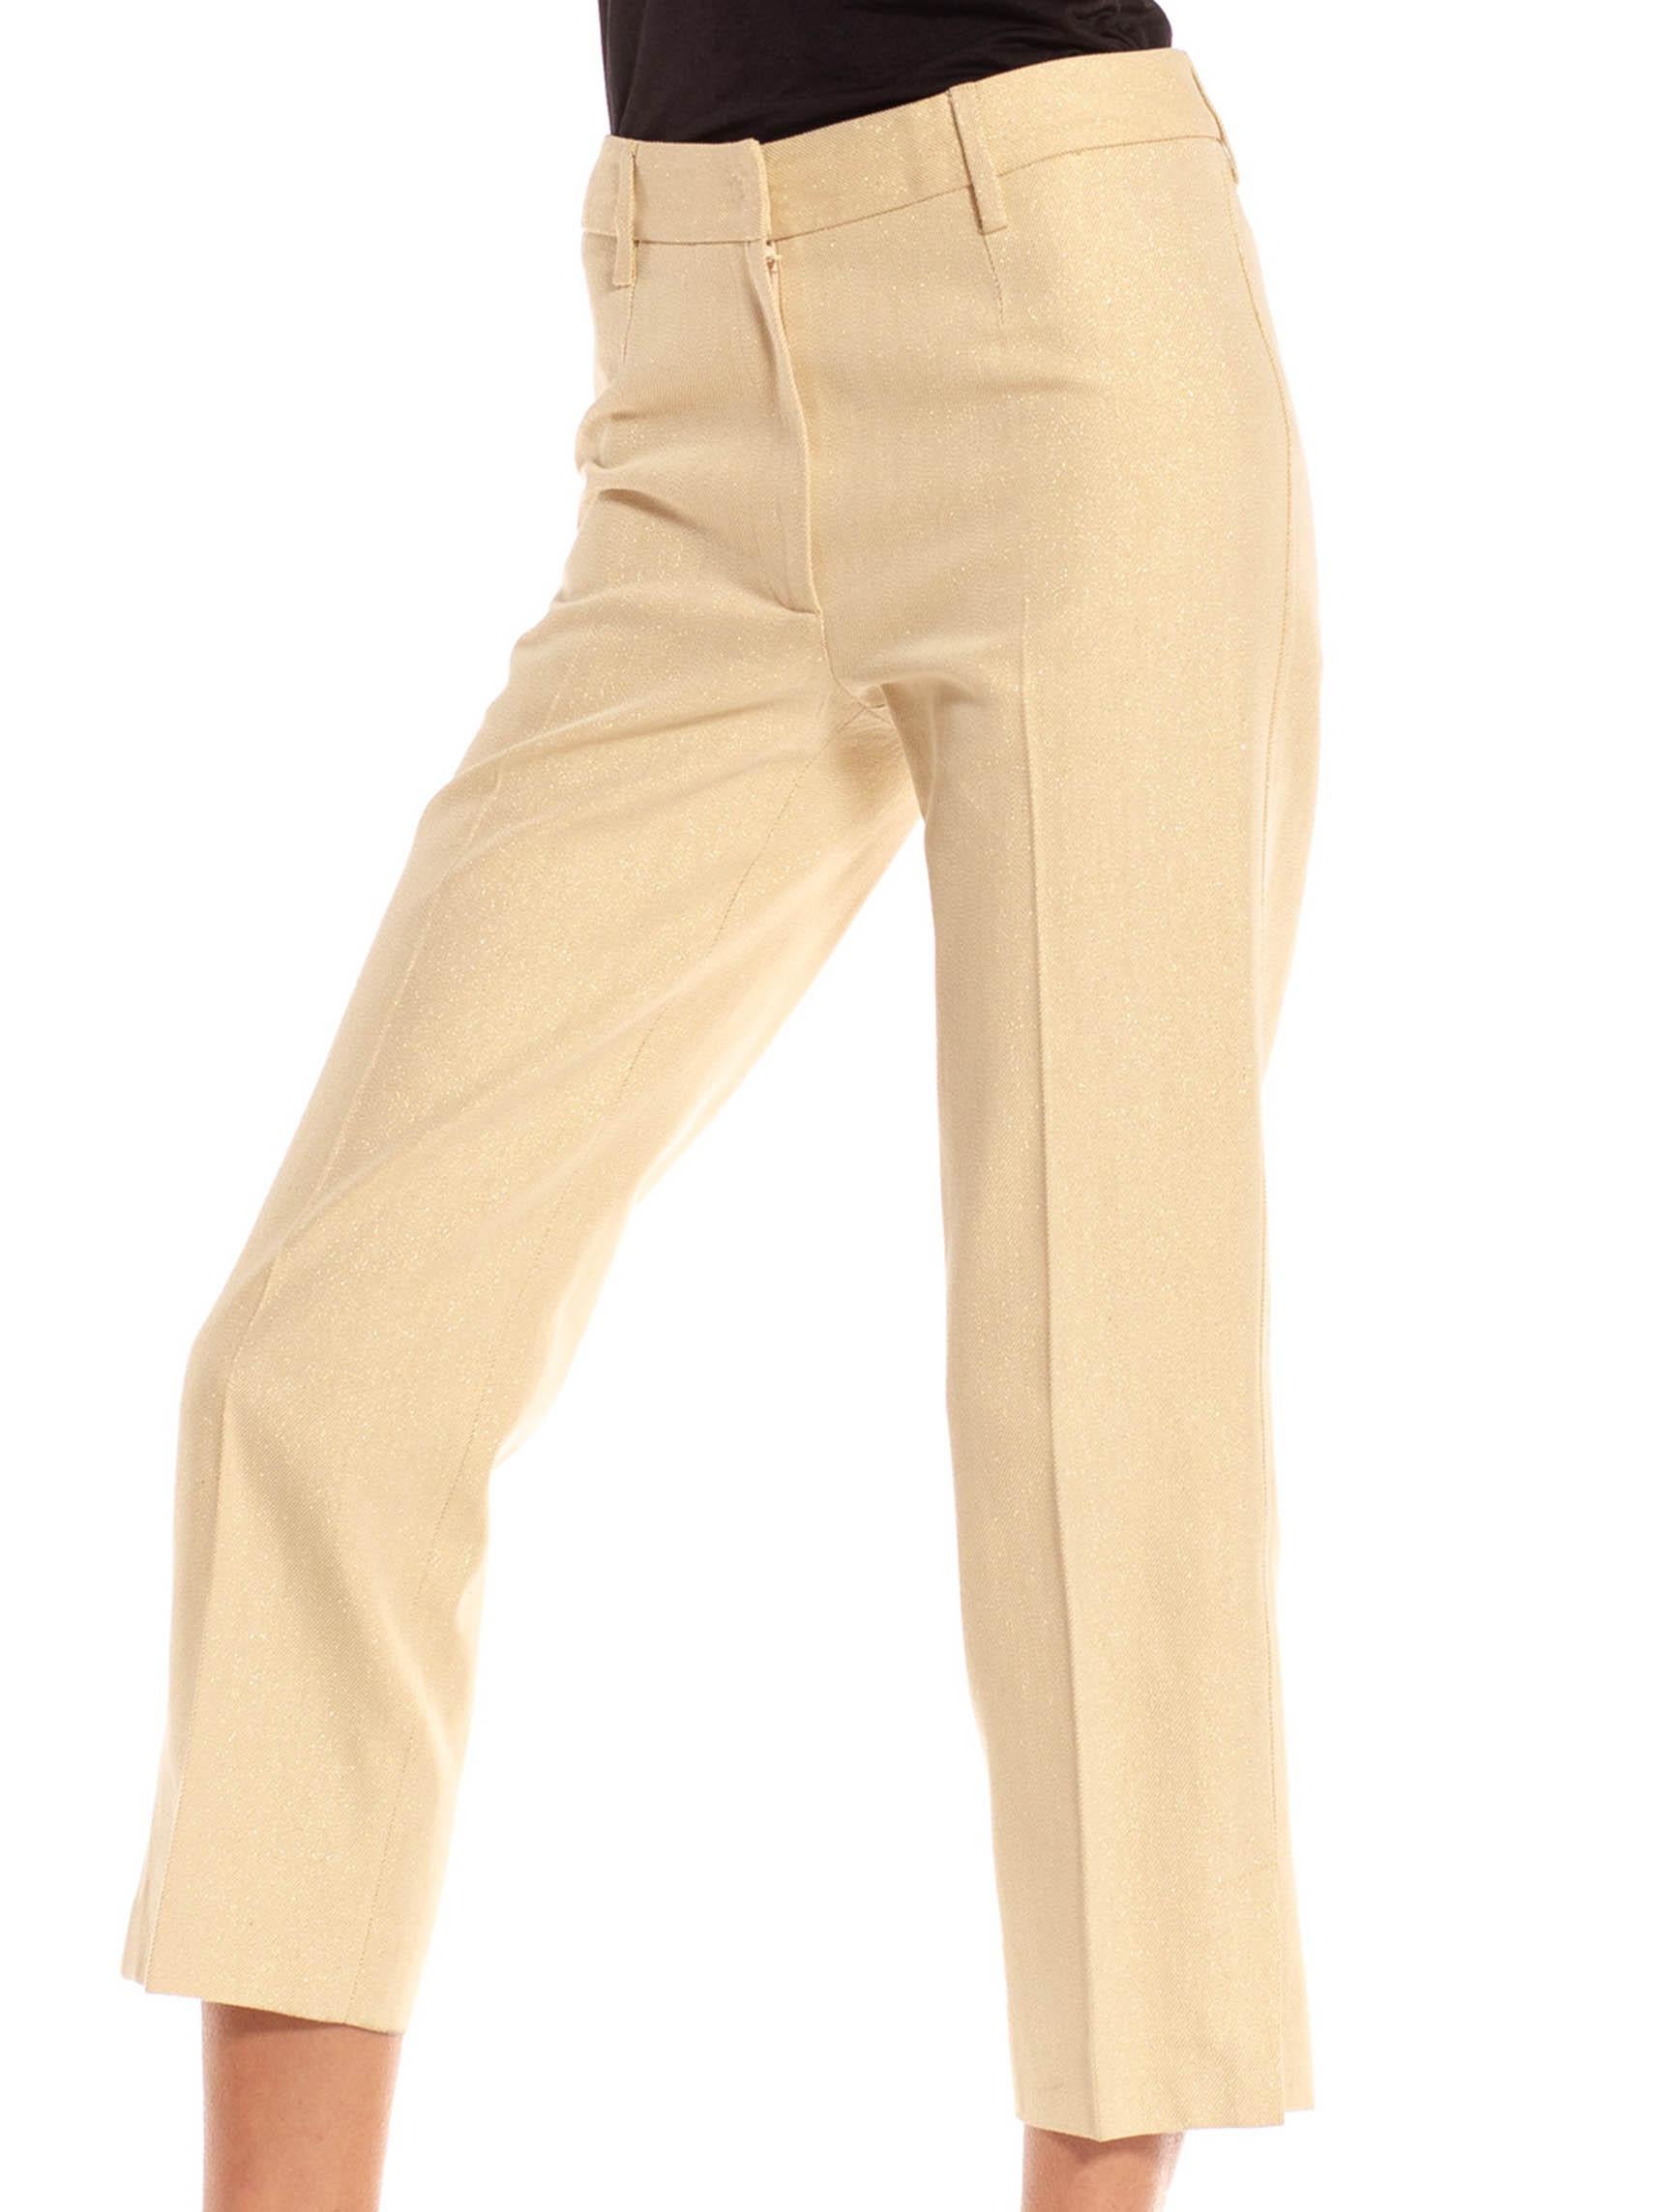 2000S Dolce & Gabbana Golden Yellow Cotton Blend Canvas Metallic Woven Pants For Sale 1